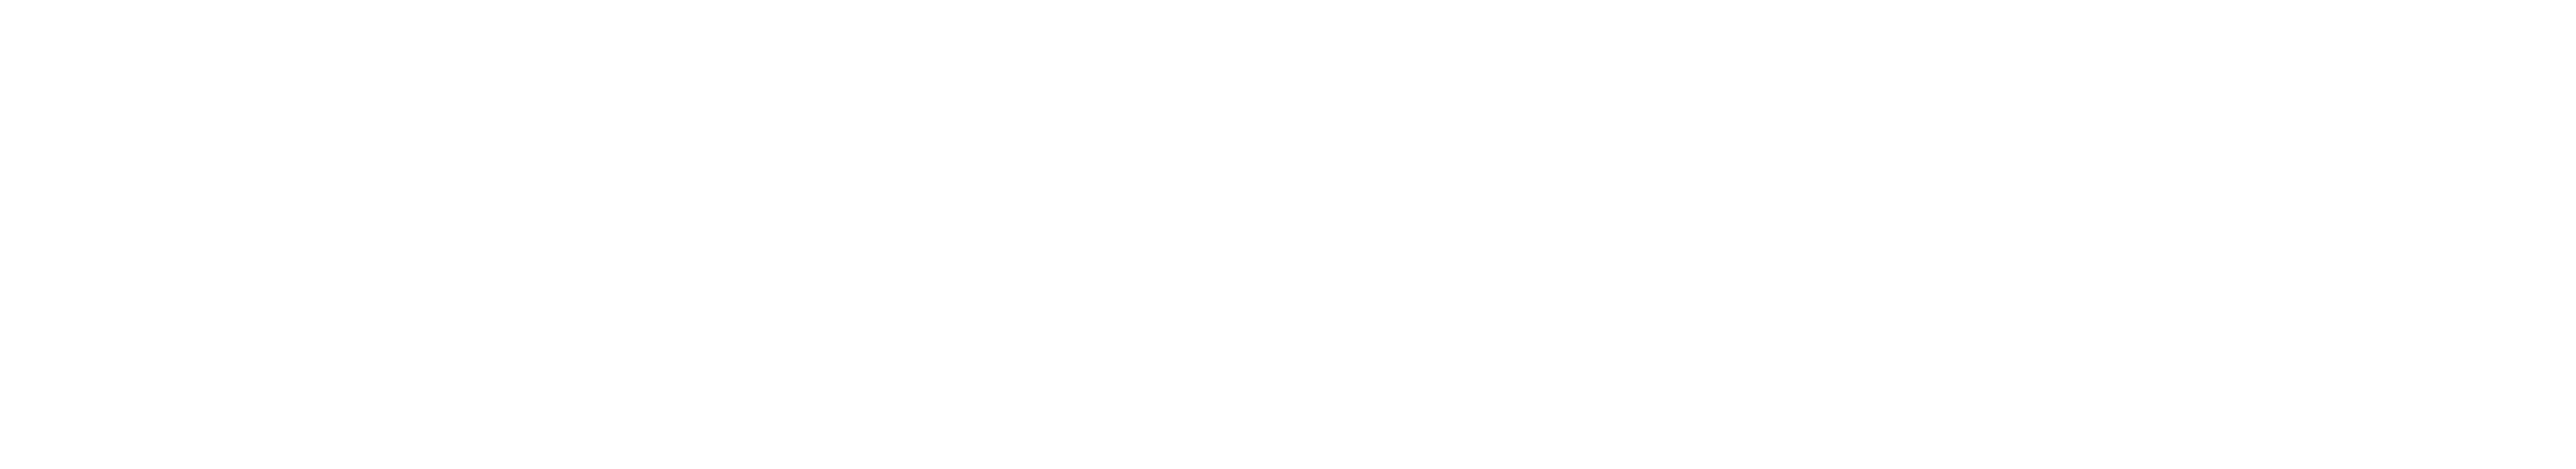 Swanson Logo - Entrepreneur, Keynote Speaker + Marketing Executive Joshua Swanson